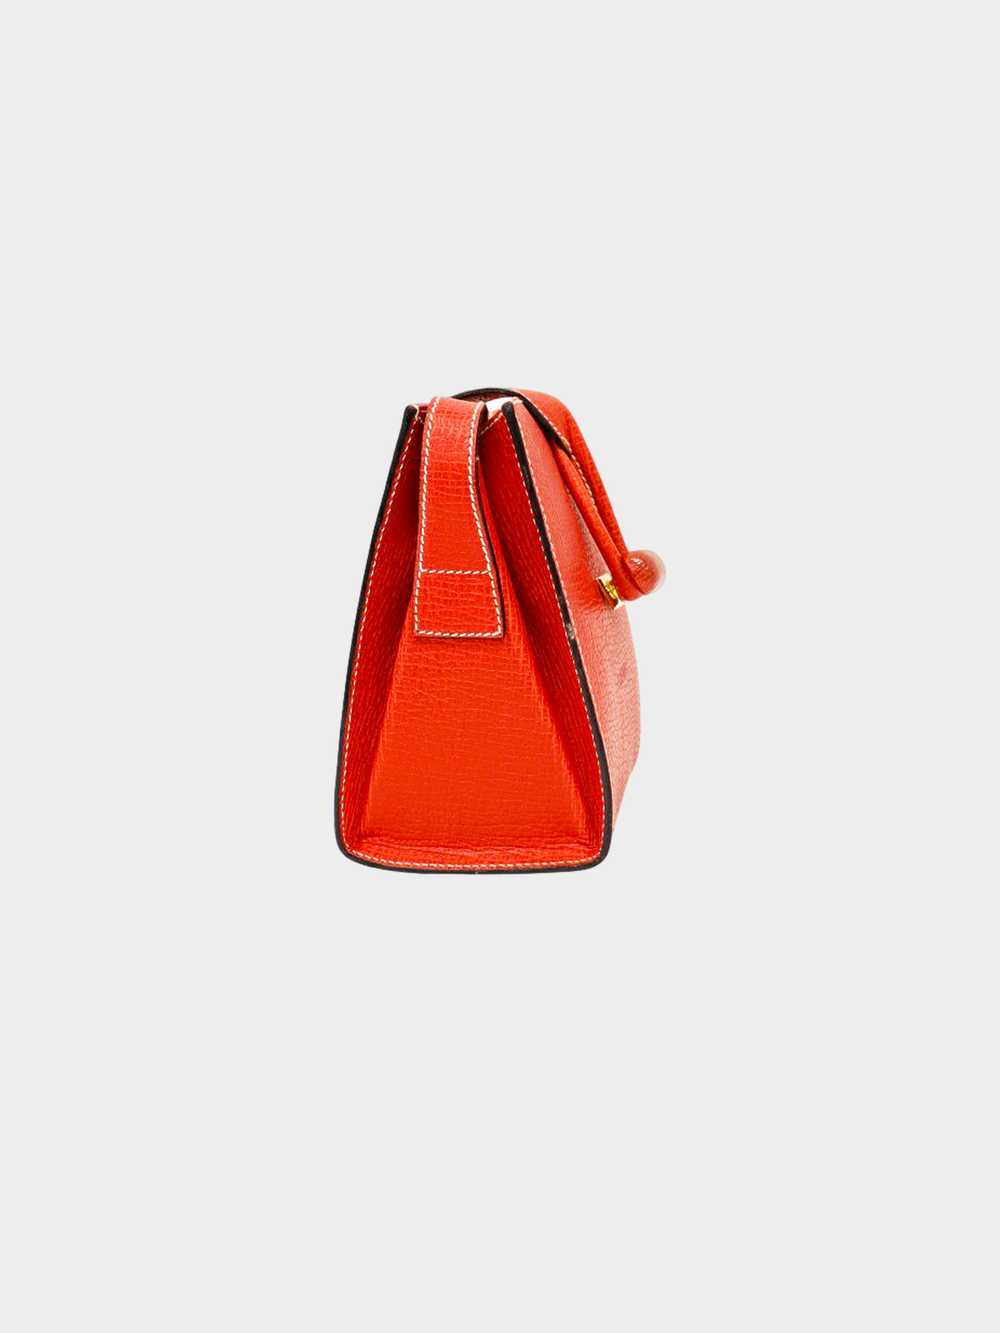 Loewe 2010s Red Mini Toggle Shoulder Bag - image 3